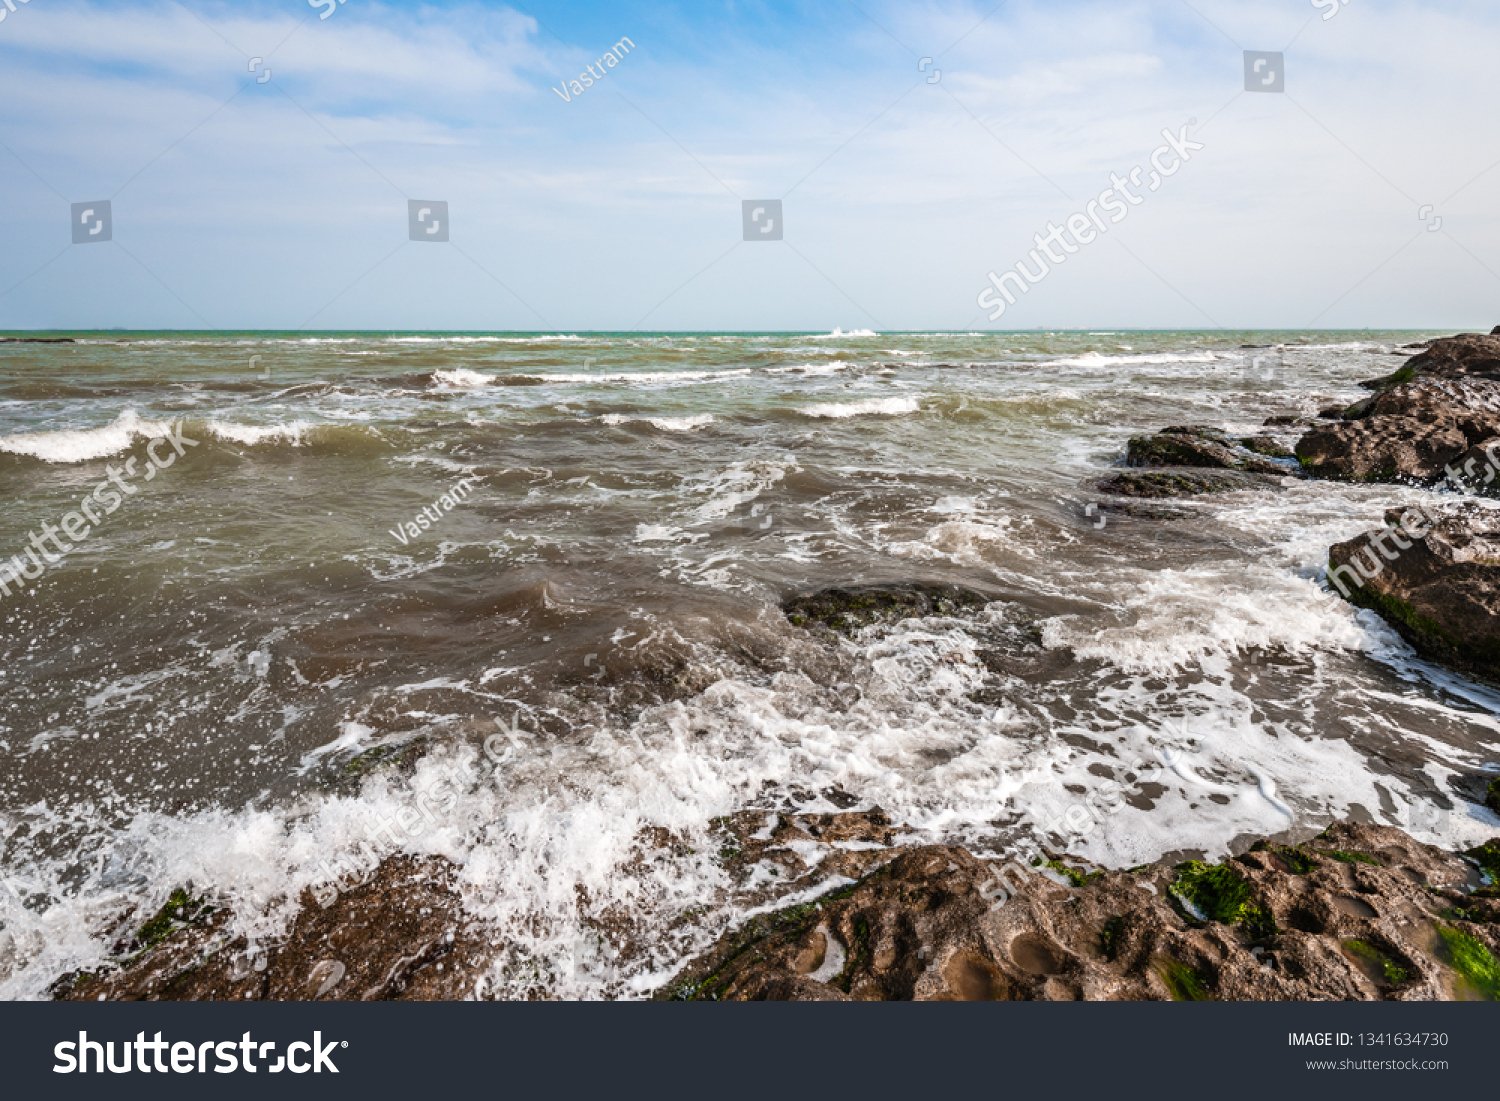  Splash of waves on a rocky seashore landscape #1341634730